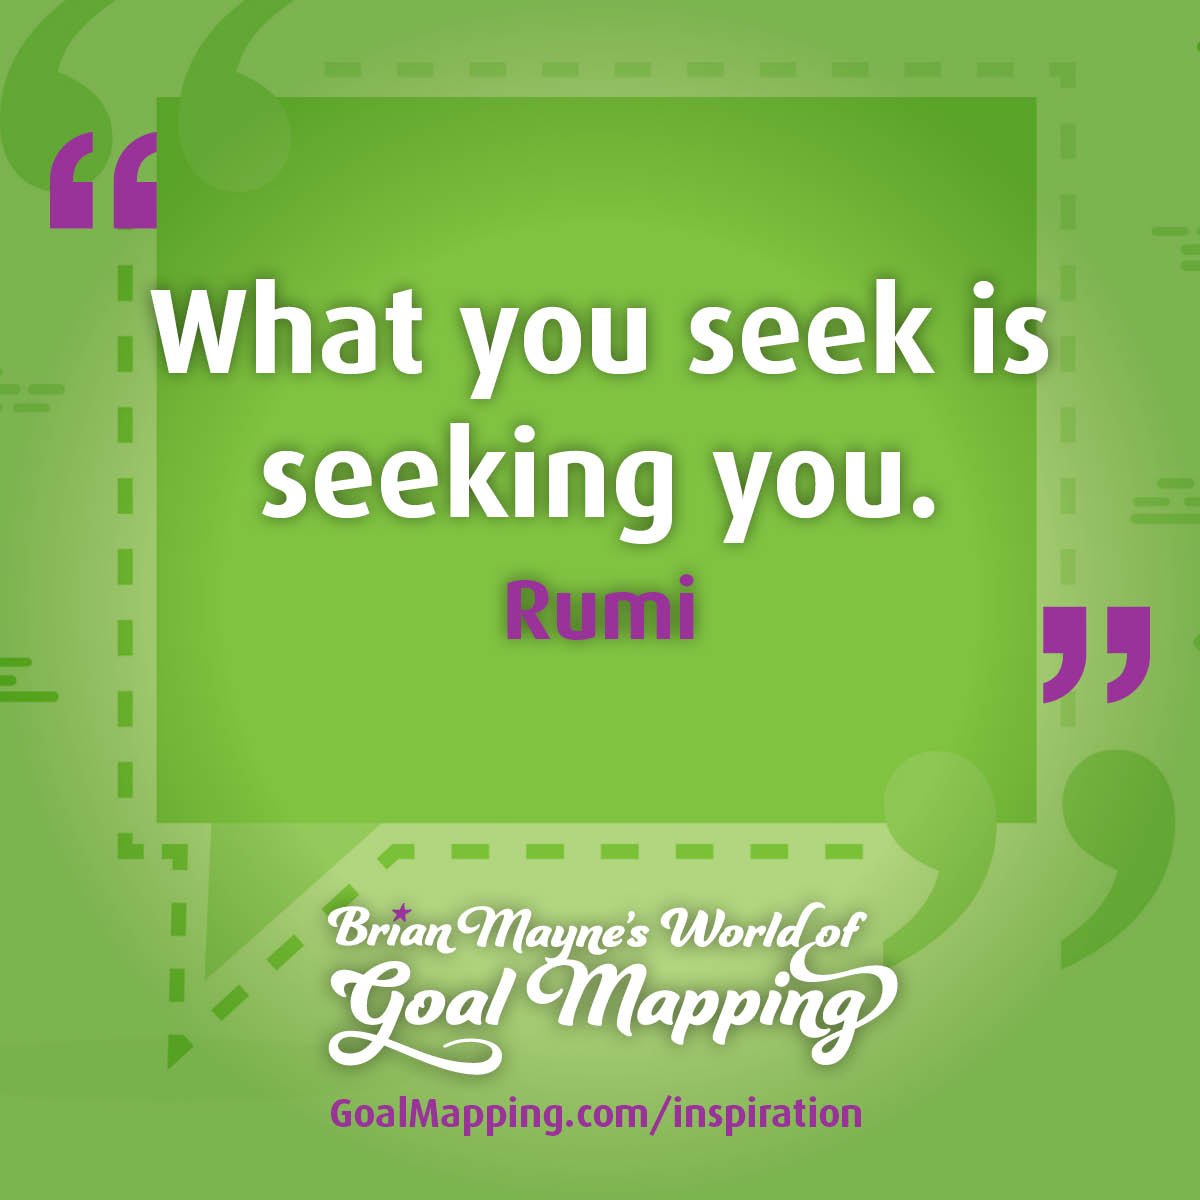 "What you seek is seeking you." Rumi